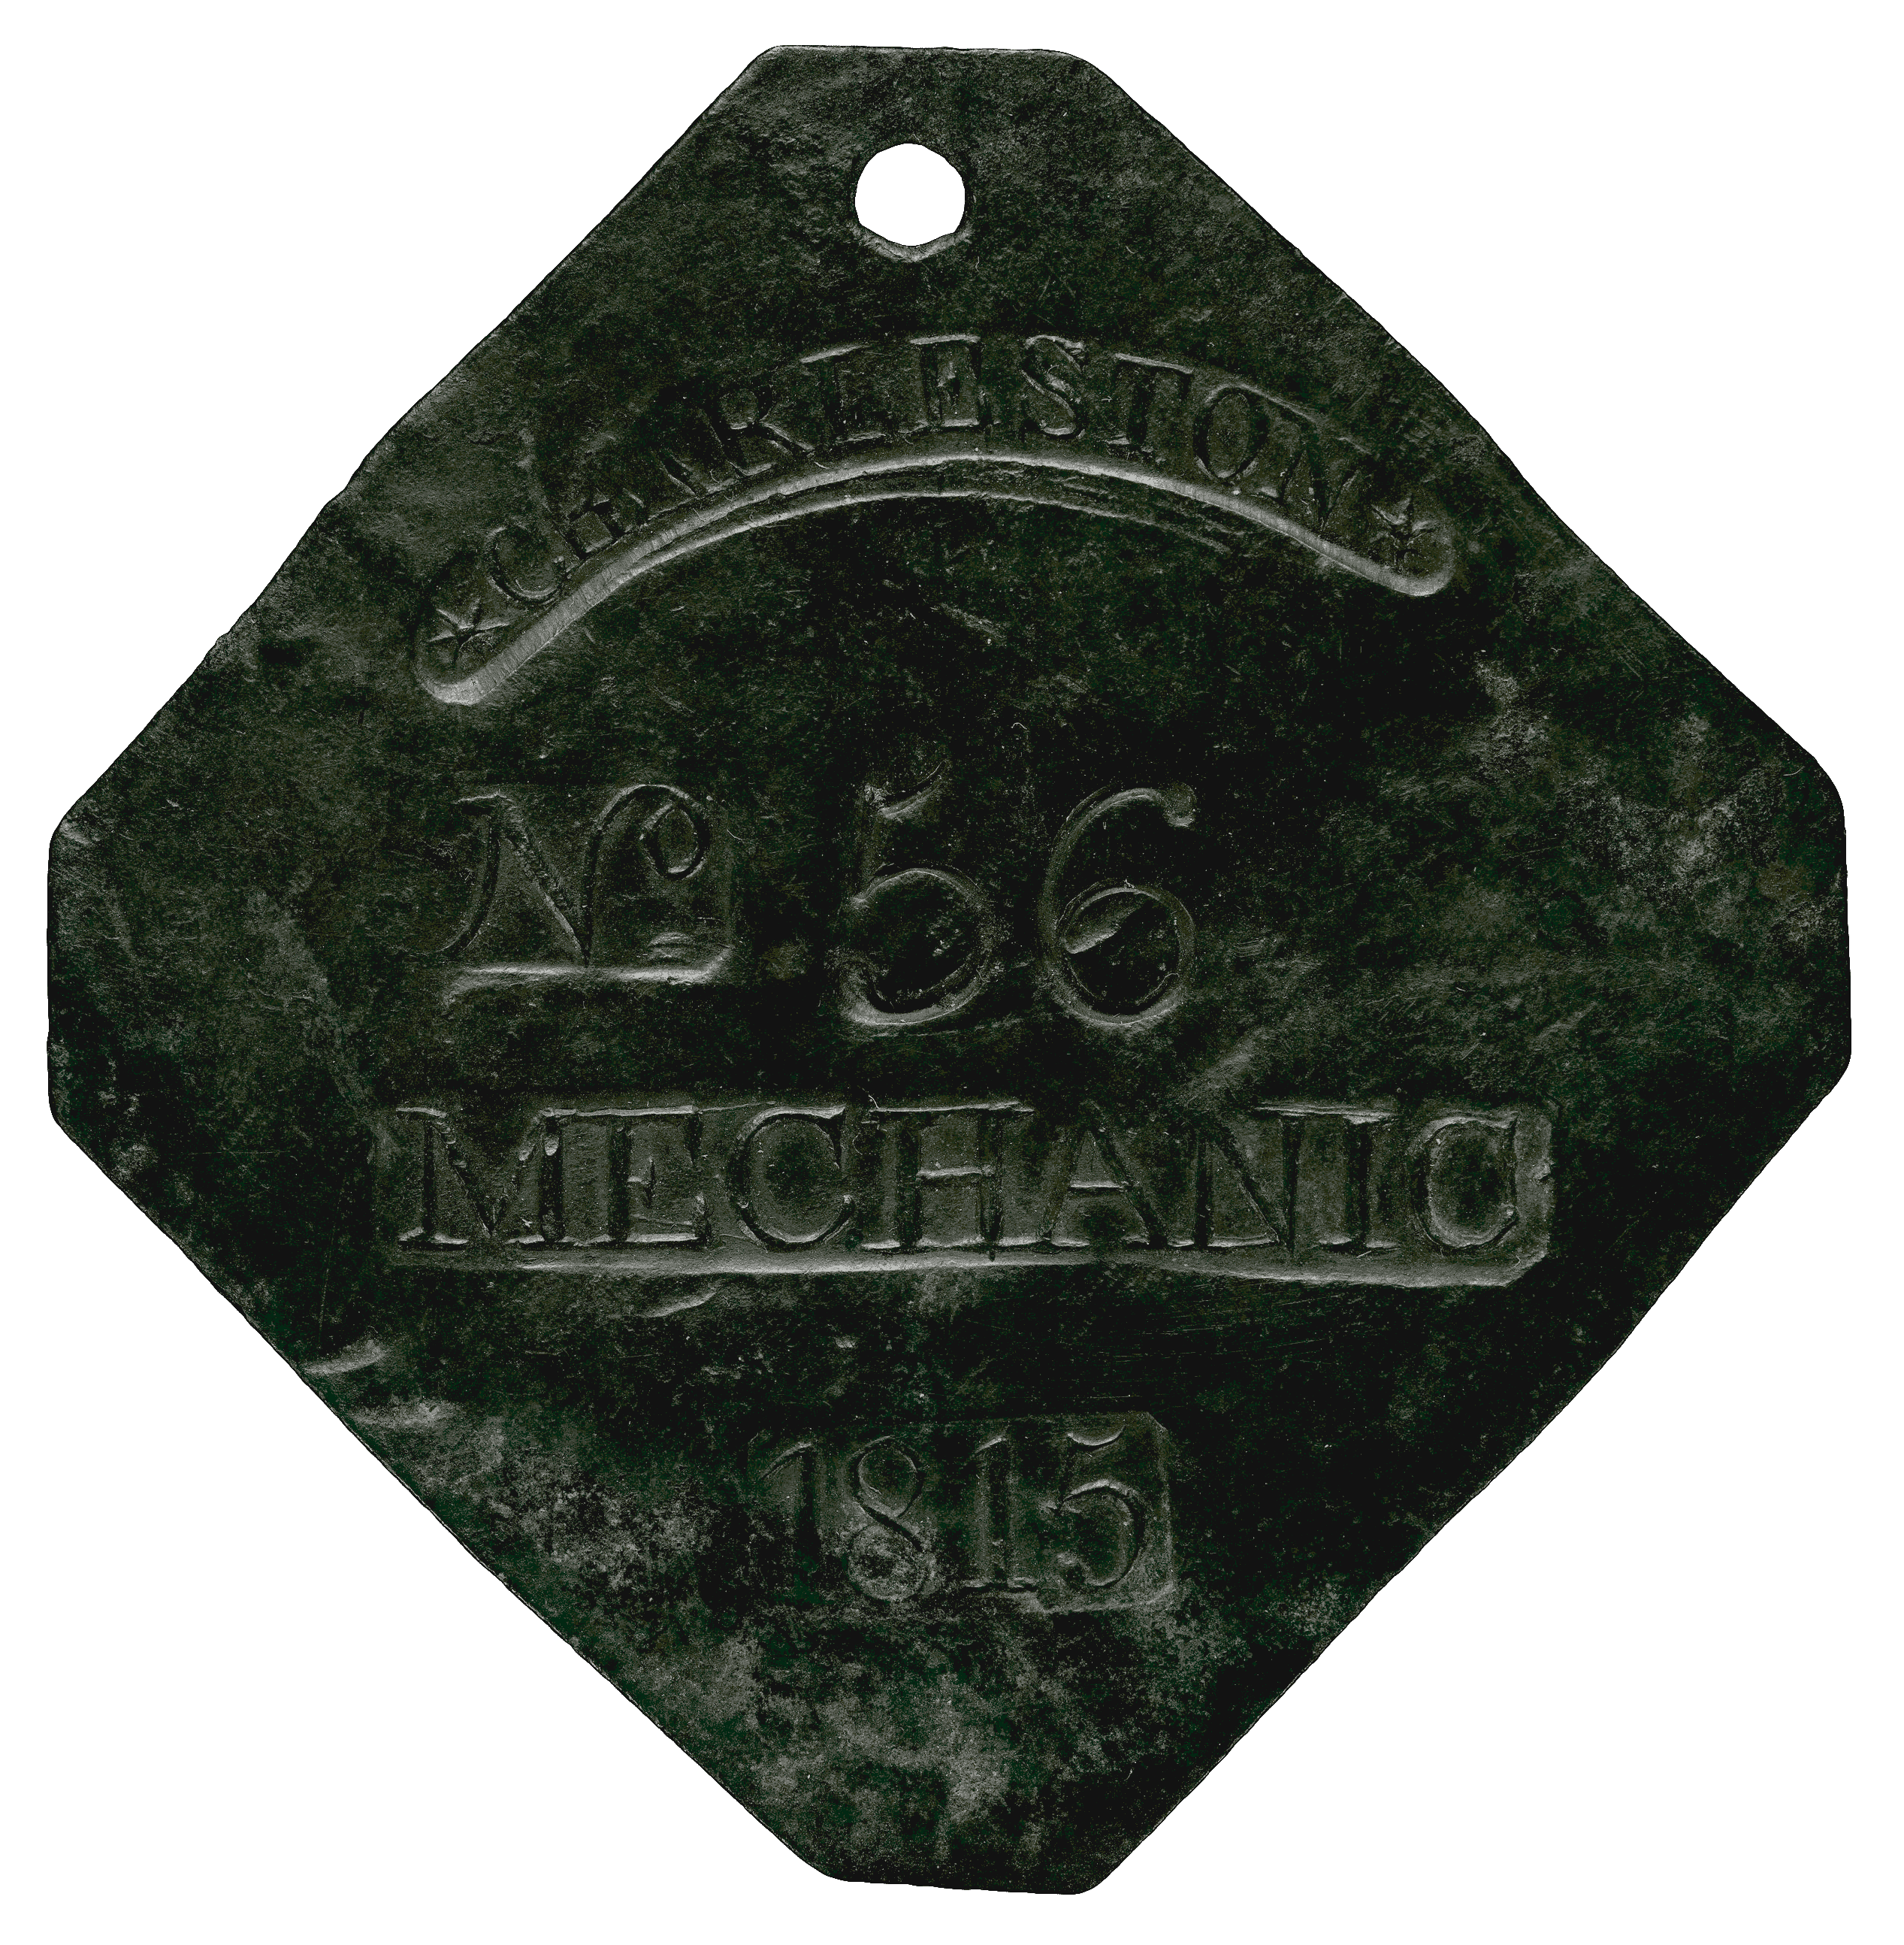 Metal diamond shaped medal with "Charleston NO. 56 MECHANIC  1815" embossed on it.